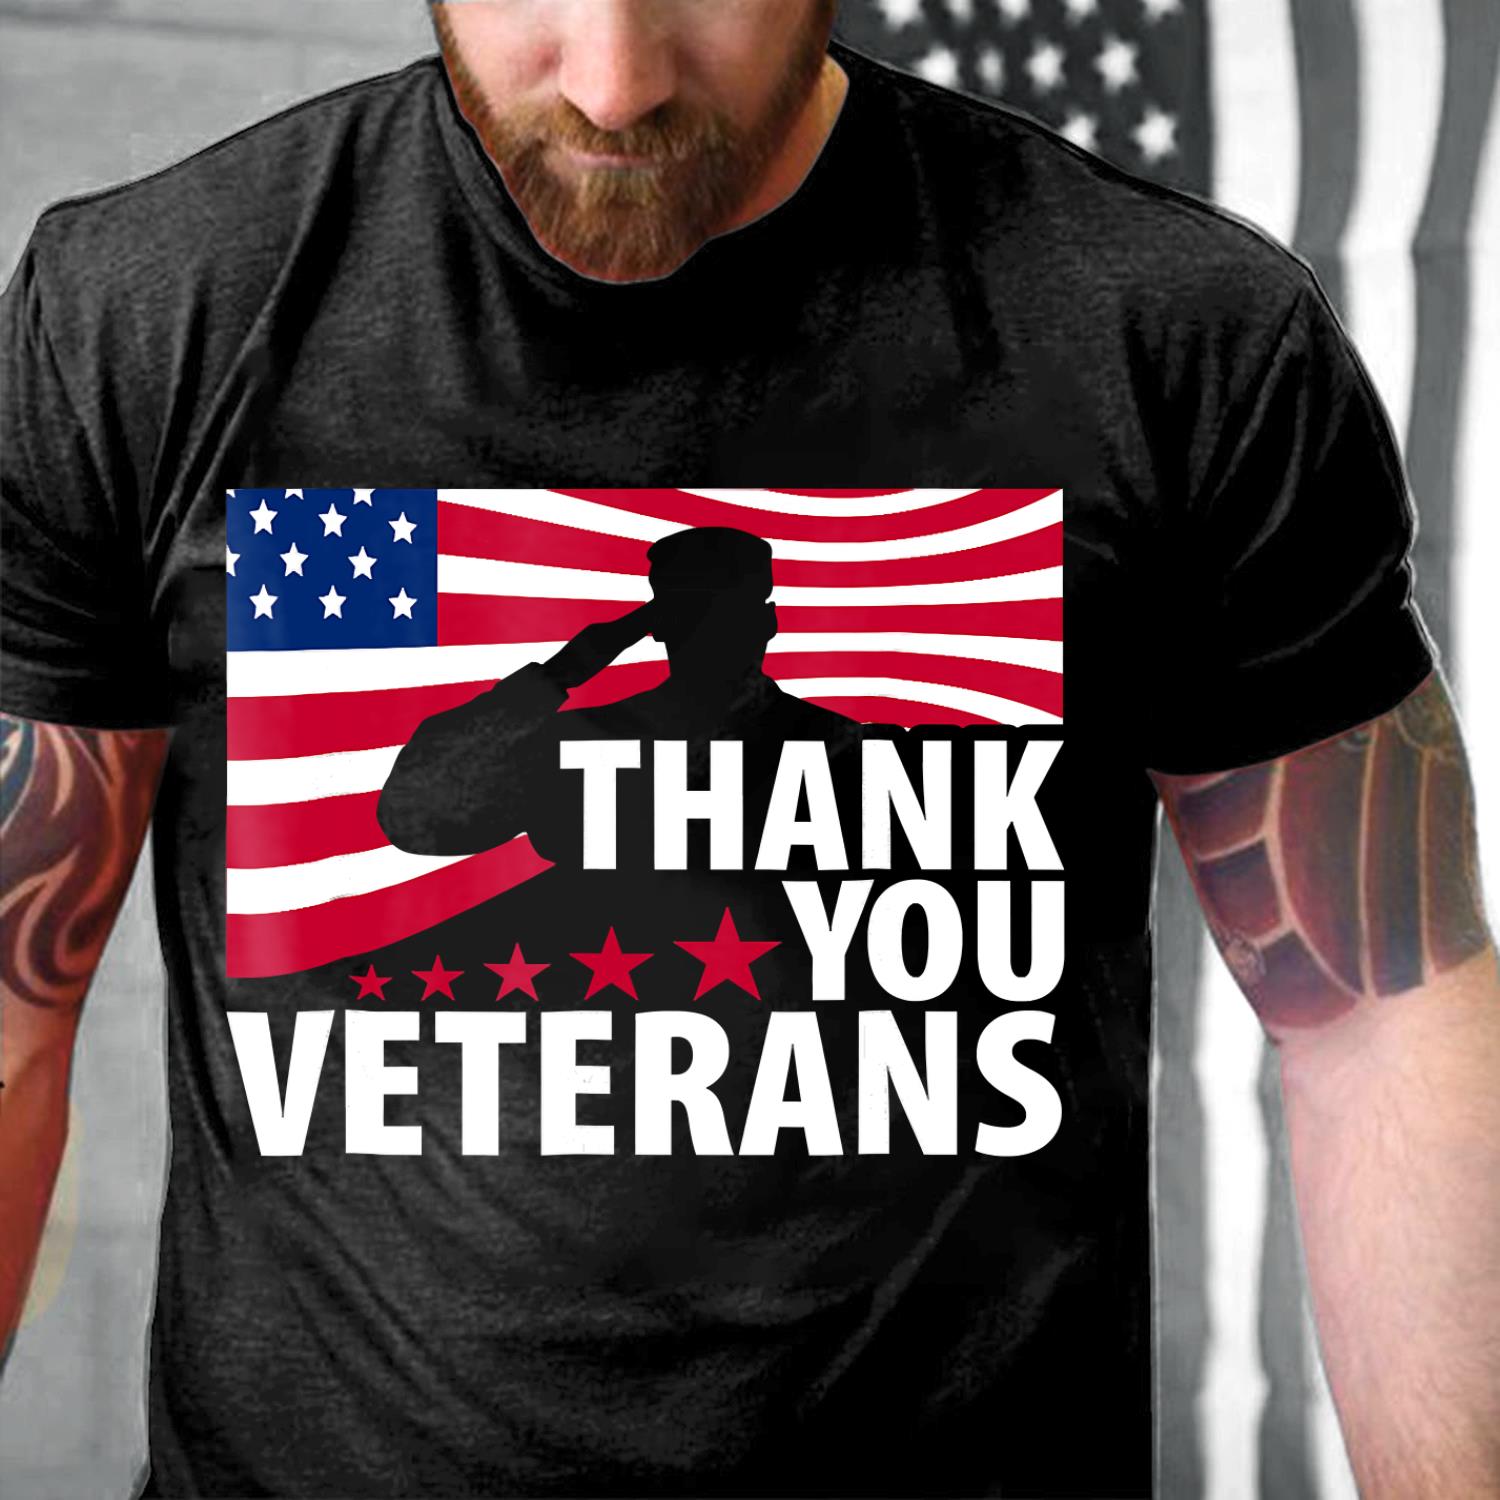 Veteran's Day - Thank You Veterans USA Flag T-Shirt